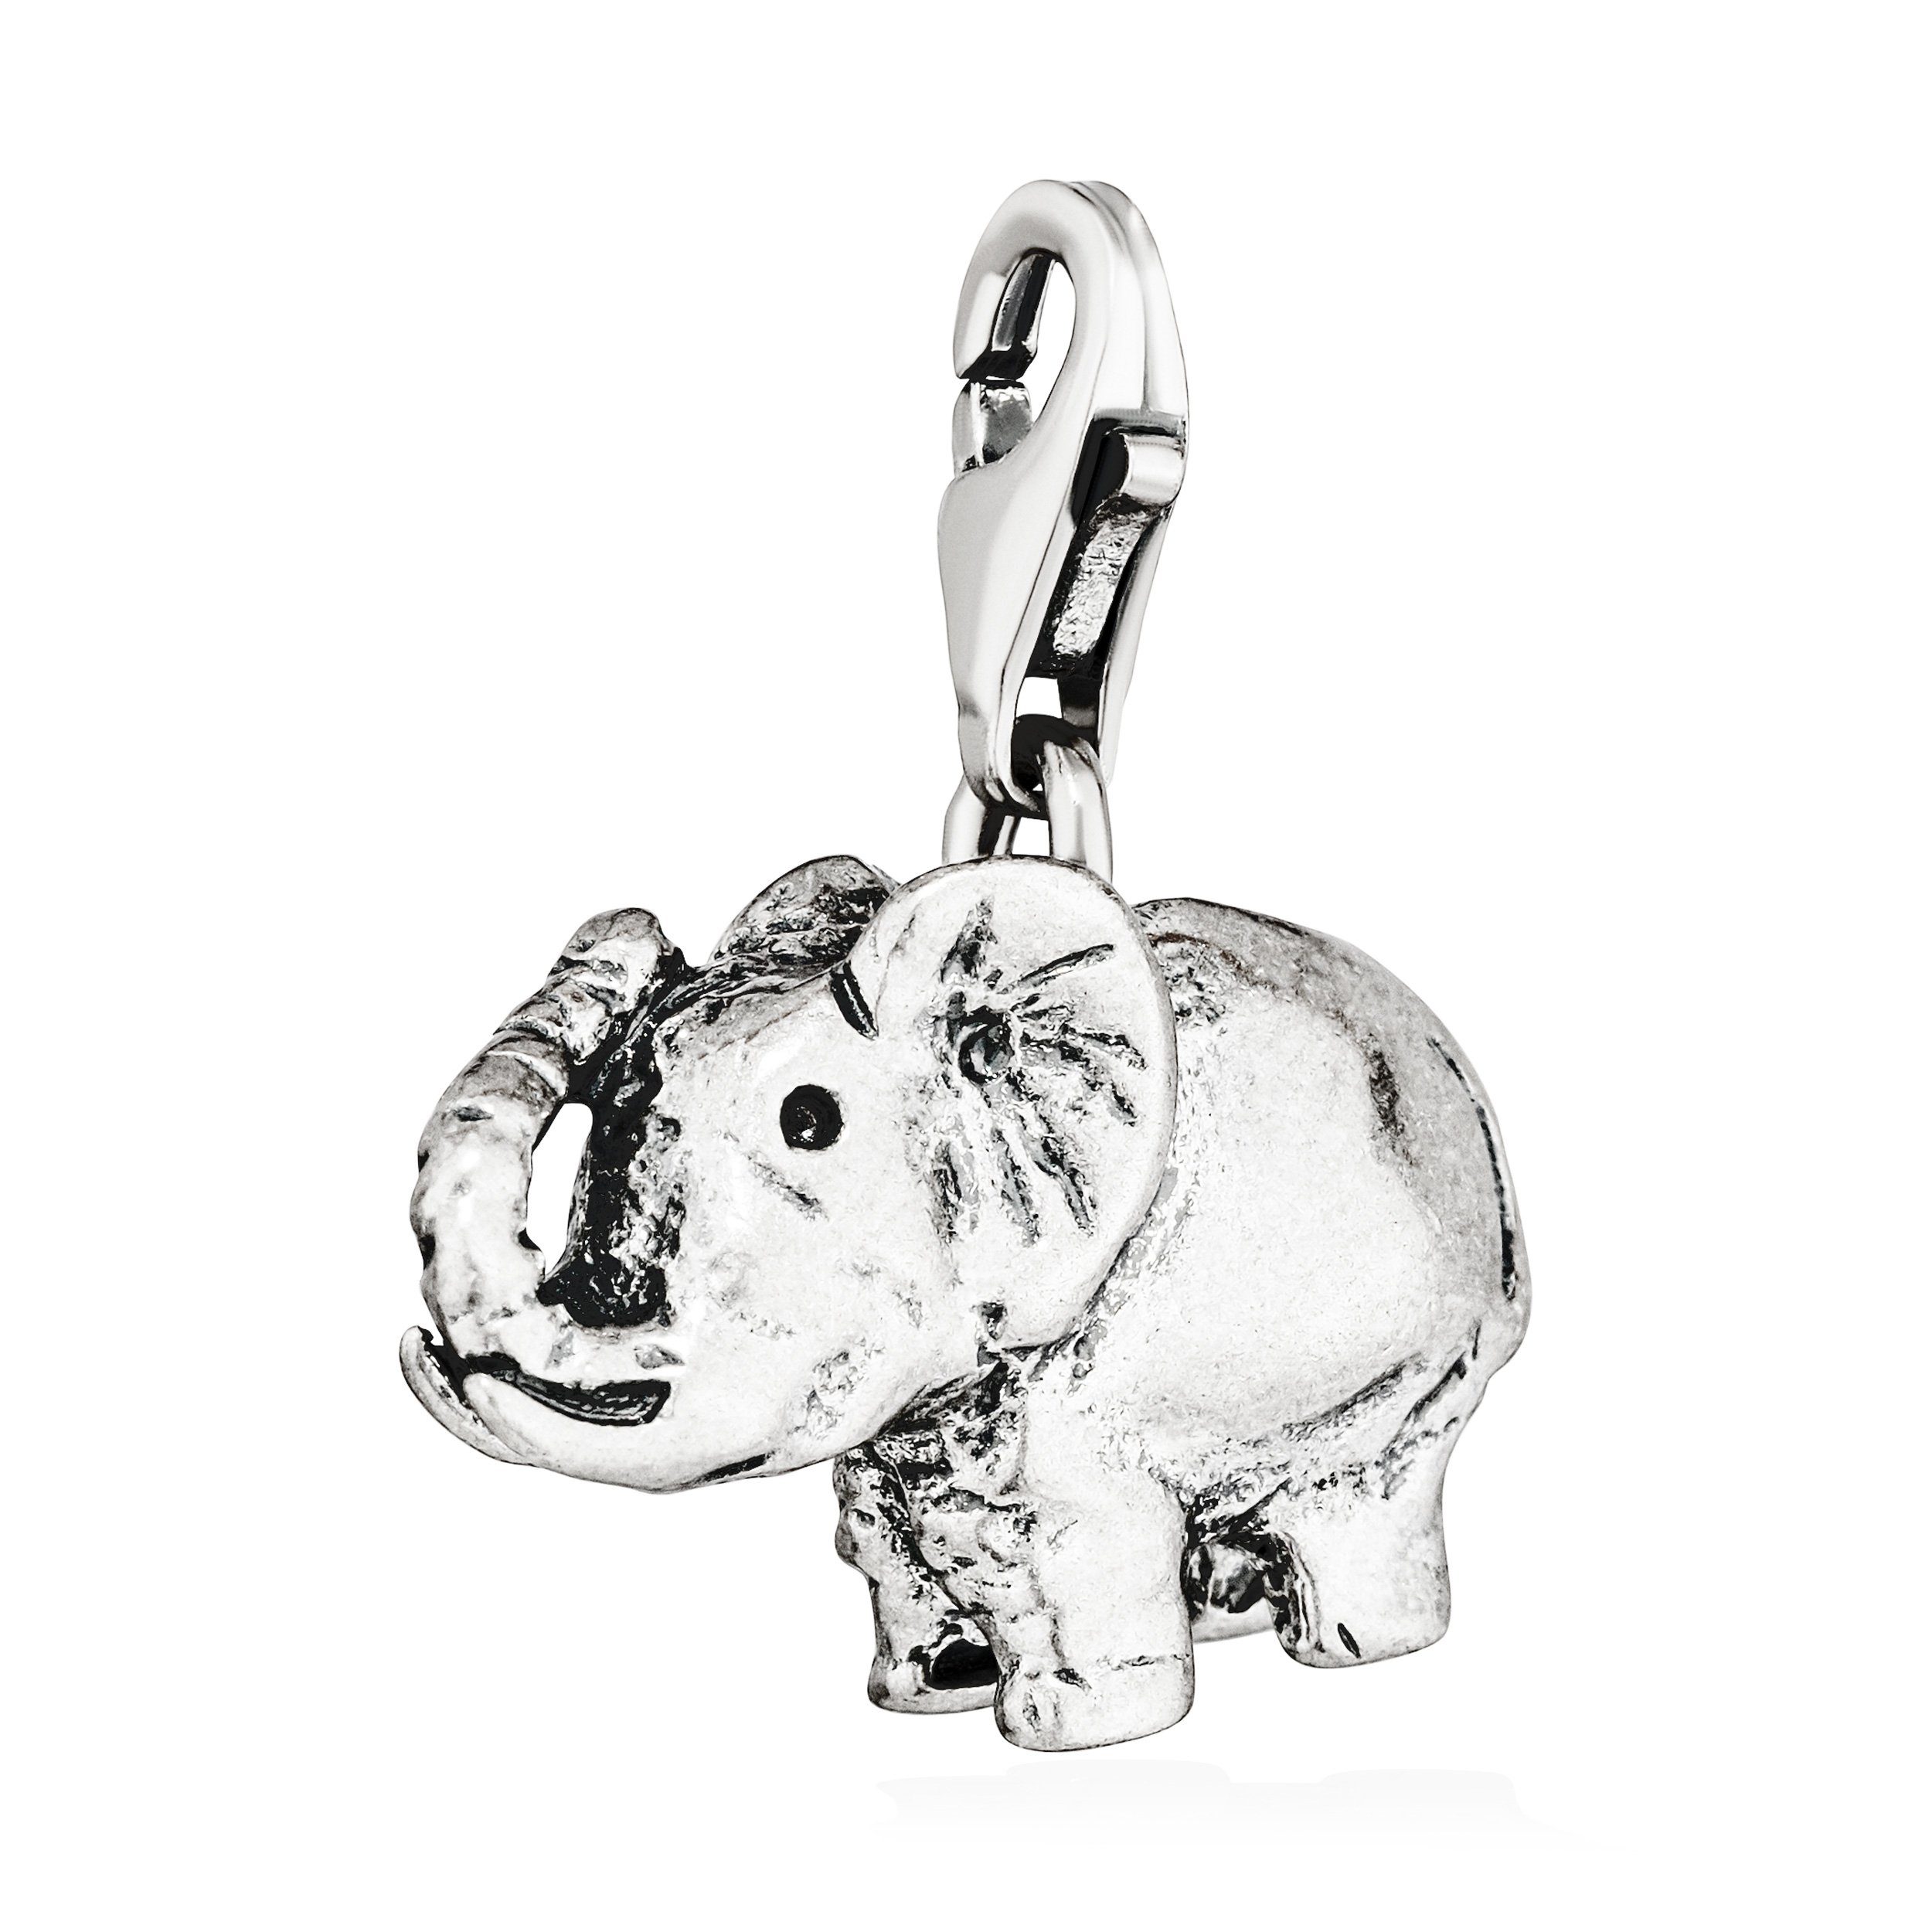 NKlaus Kettenanhänger Silber Amulett Charm-Anhänger Silberanhänger Elefant 14x17mm antik 925